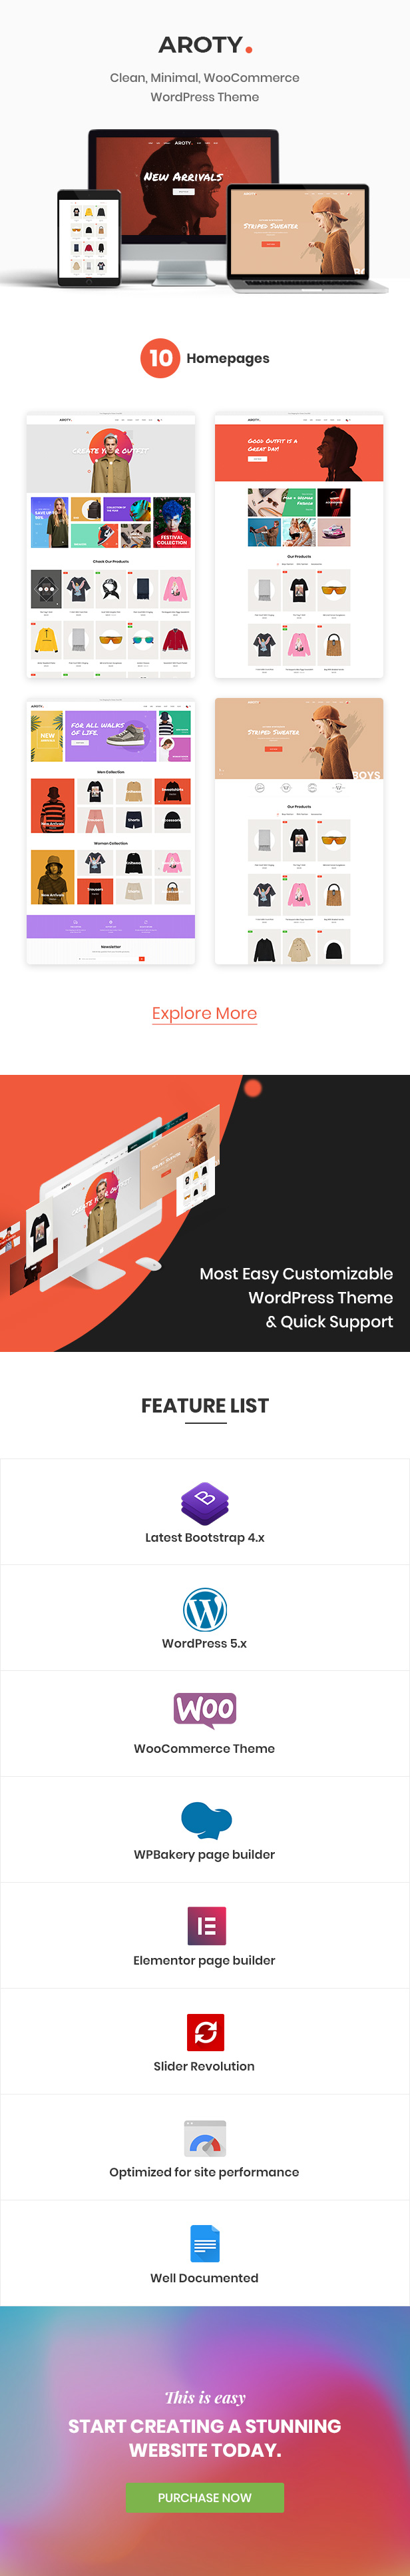 Aroty - Clean, Minimal Shop WordPress WooCommerce Theme - 1